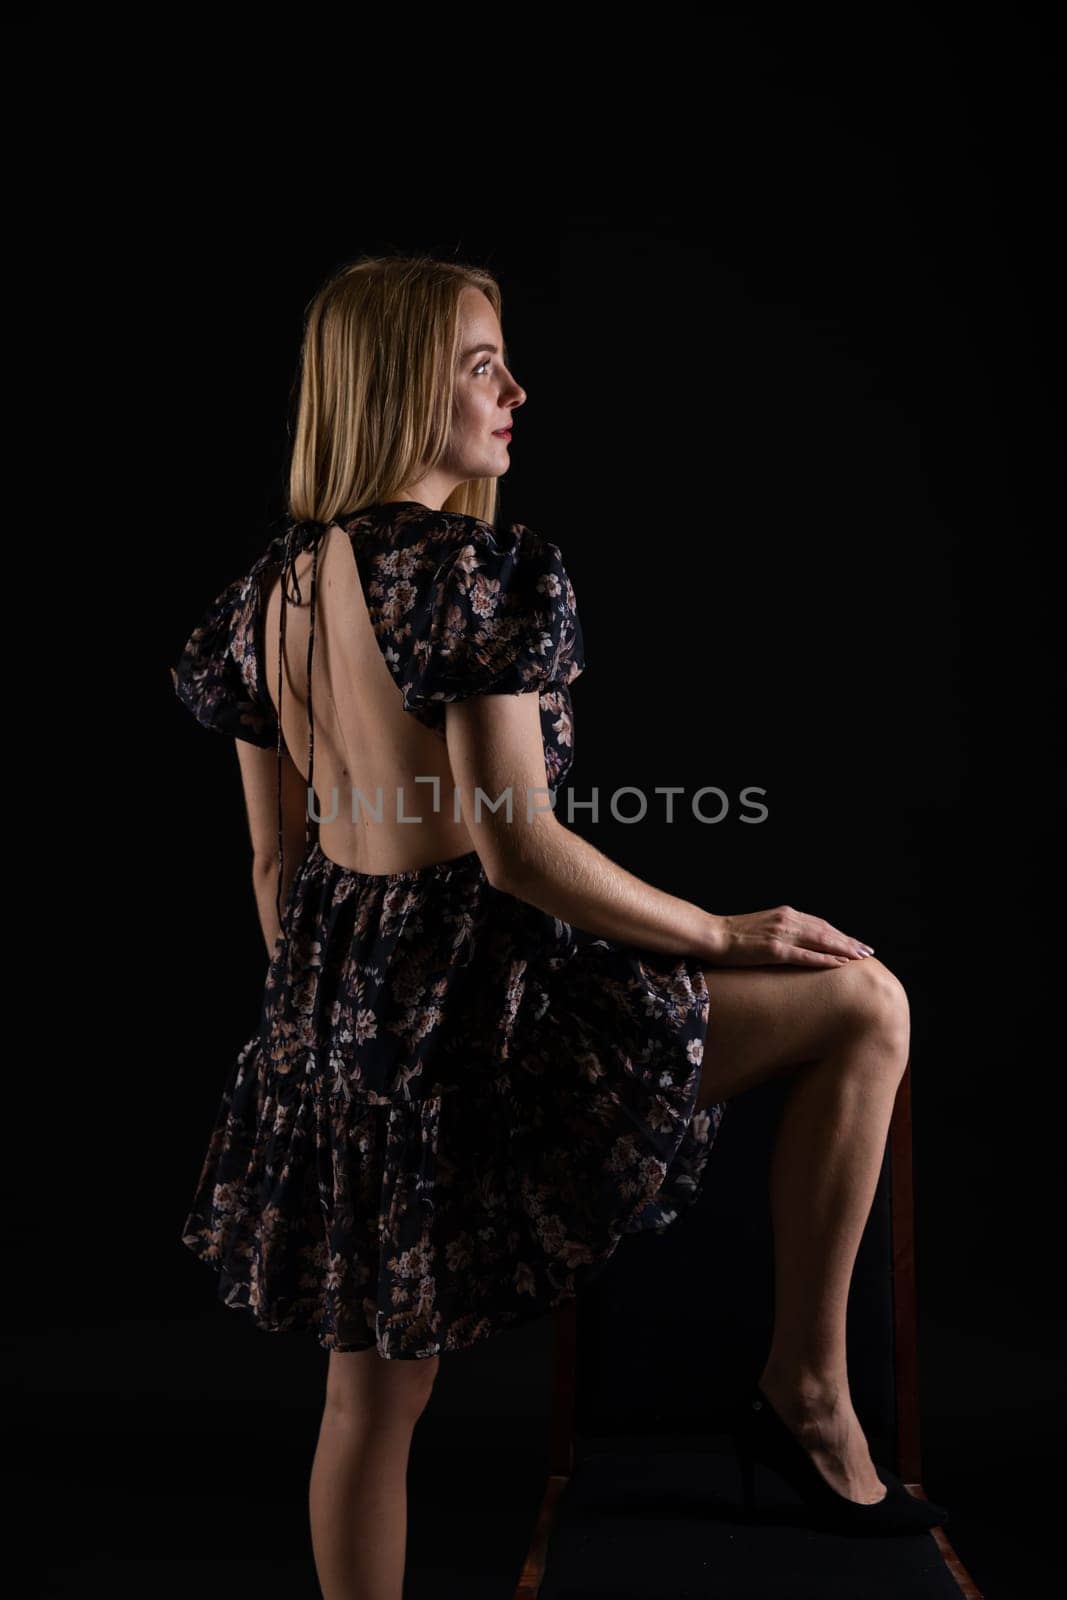 Portrait of a slender blonde woman in a dark summer dress